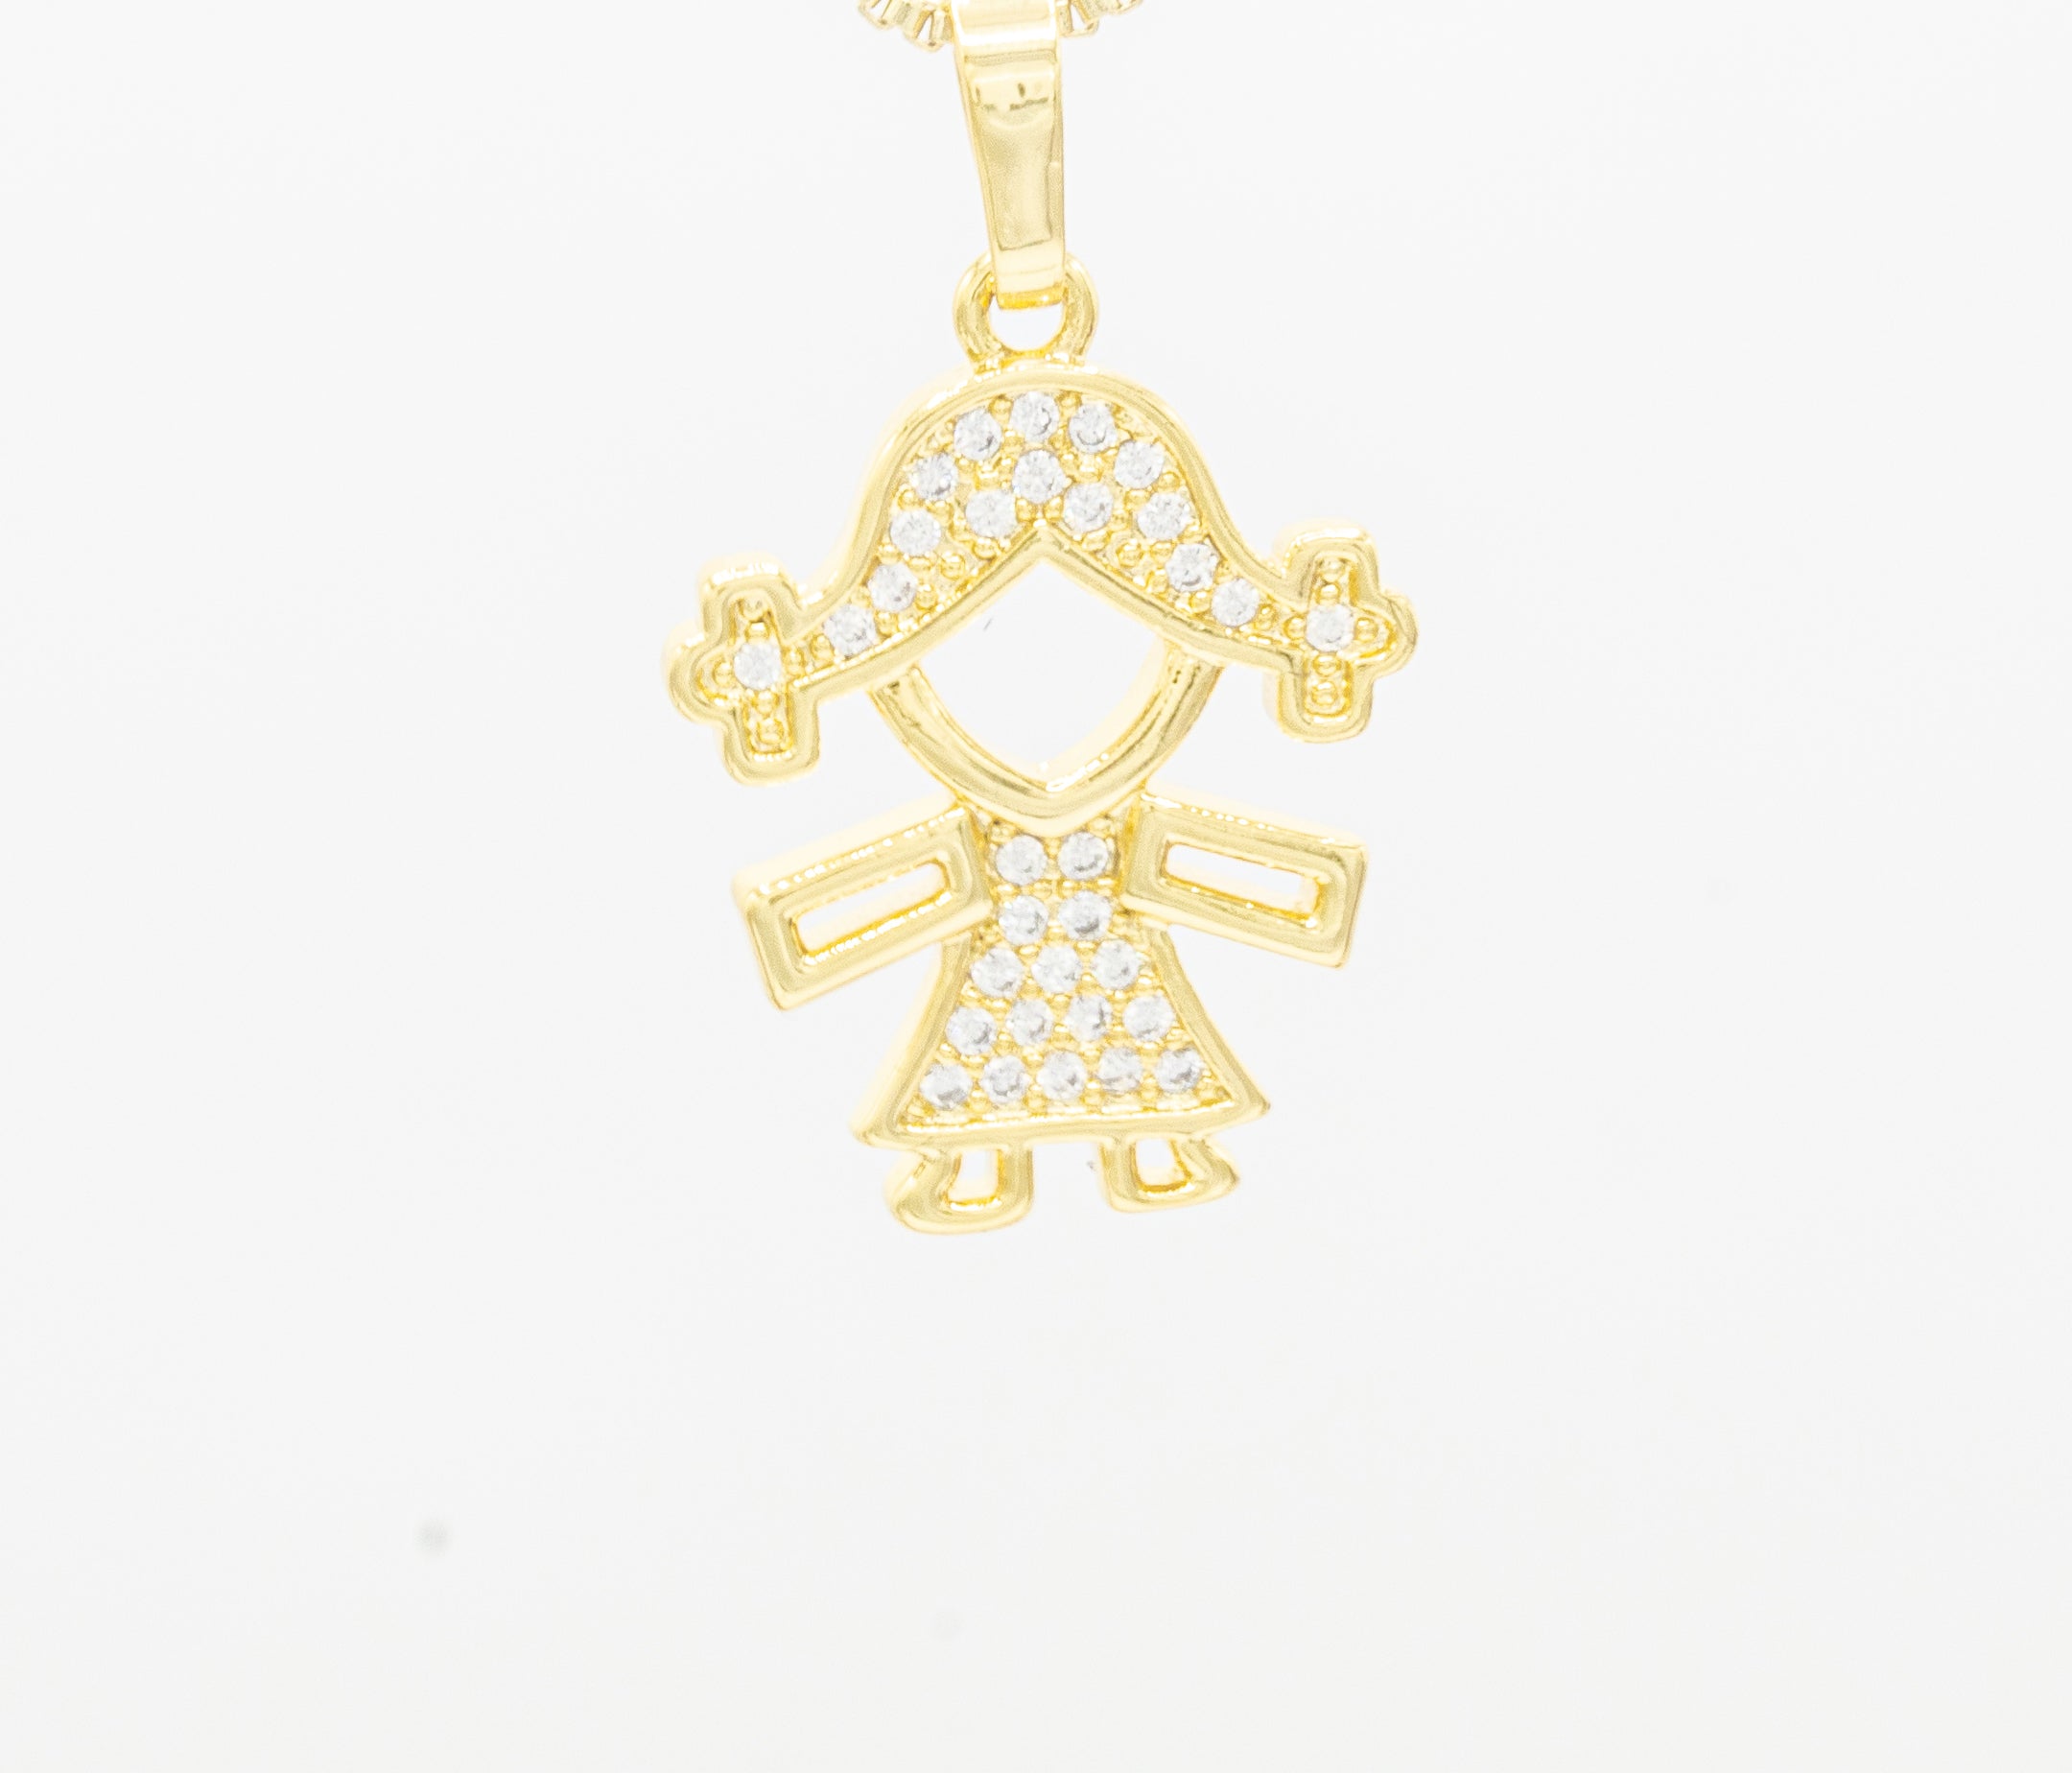 Girl Cubic Zirconia Pendant 14K Gold Filled Women Fashion Jewelry